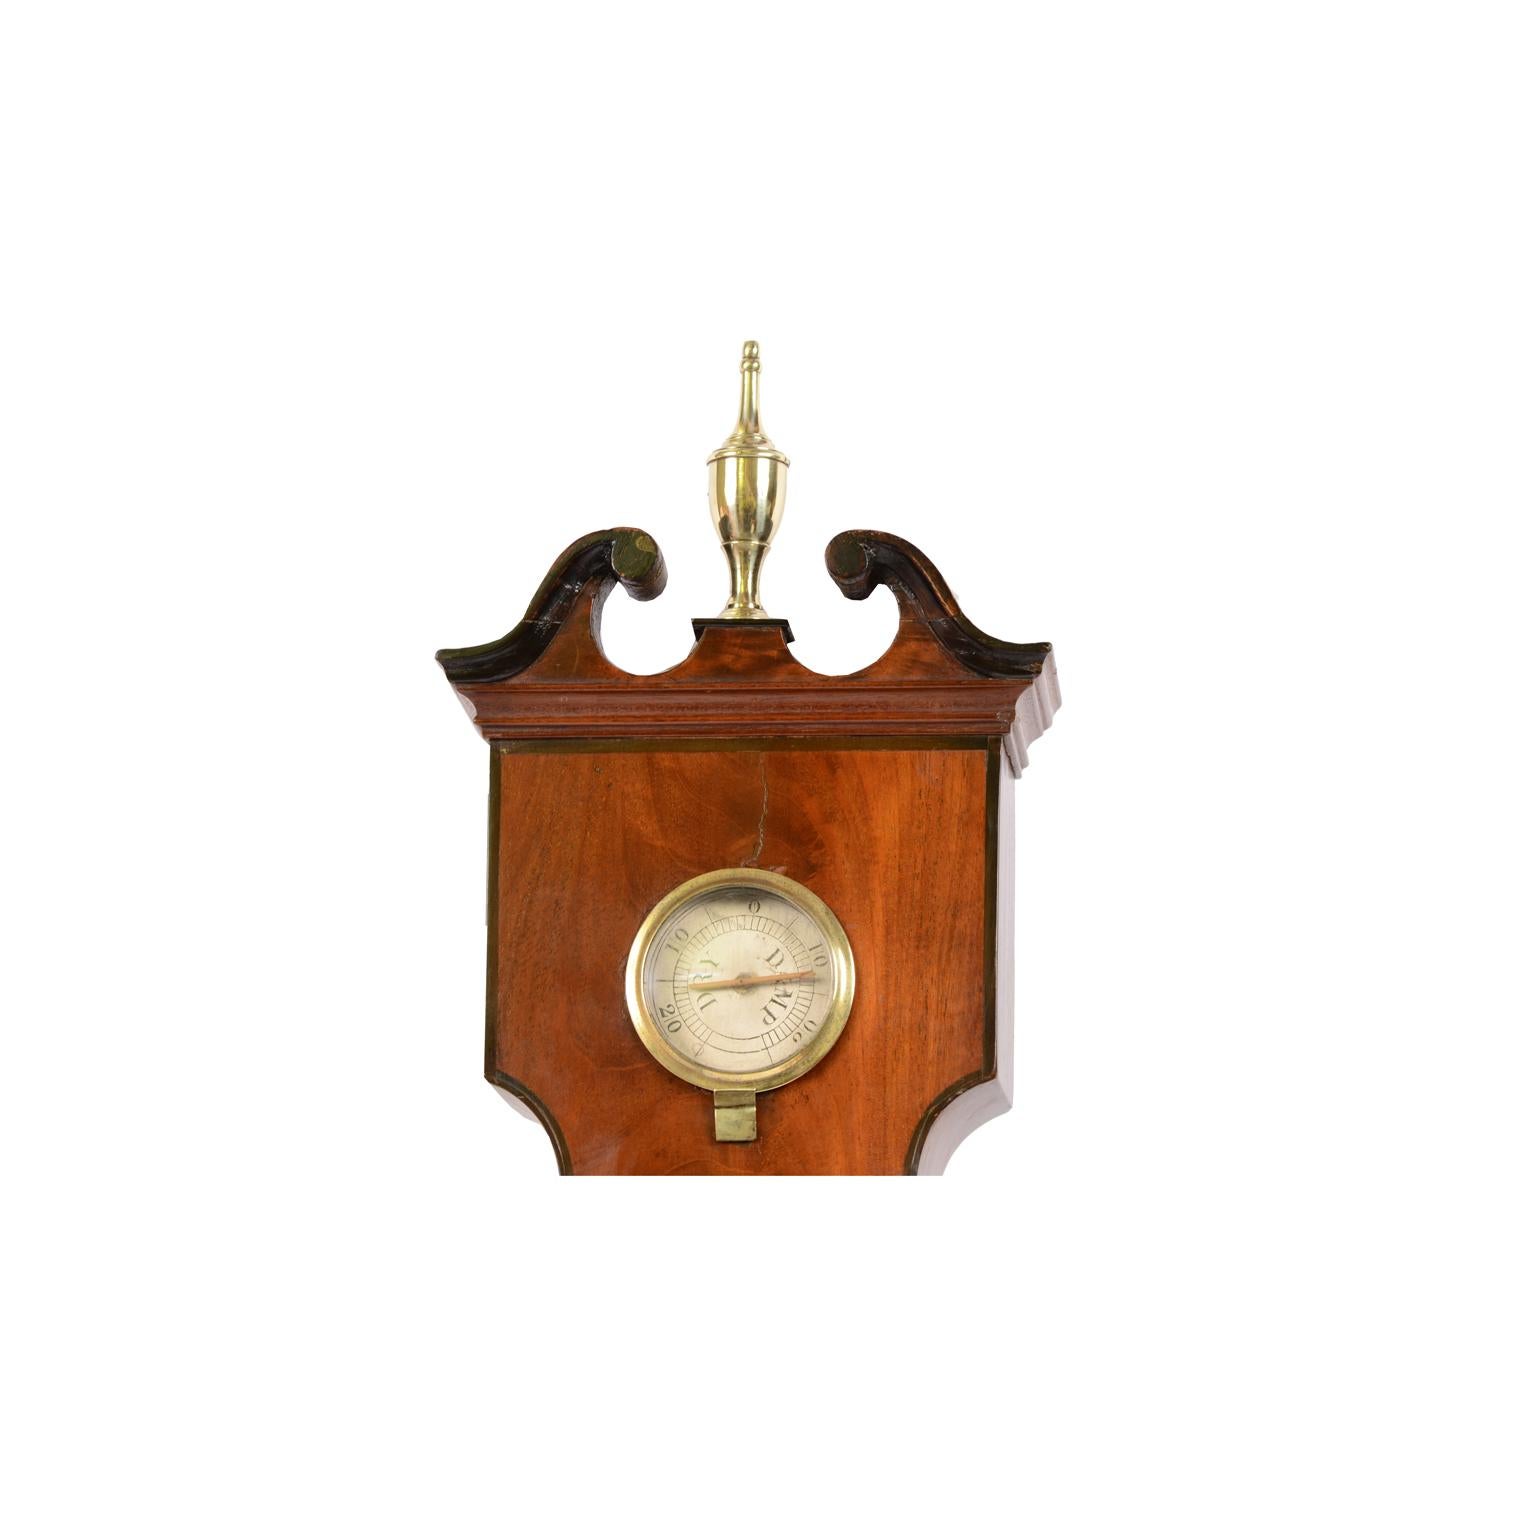 British Large Clock Barometer Antique Measuring Instrument by Amadio London 1842-1851 